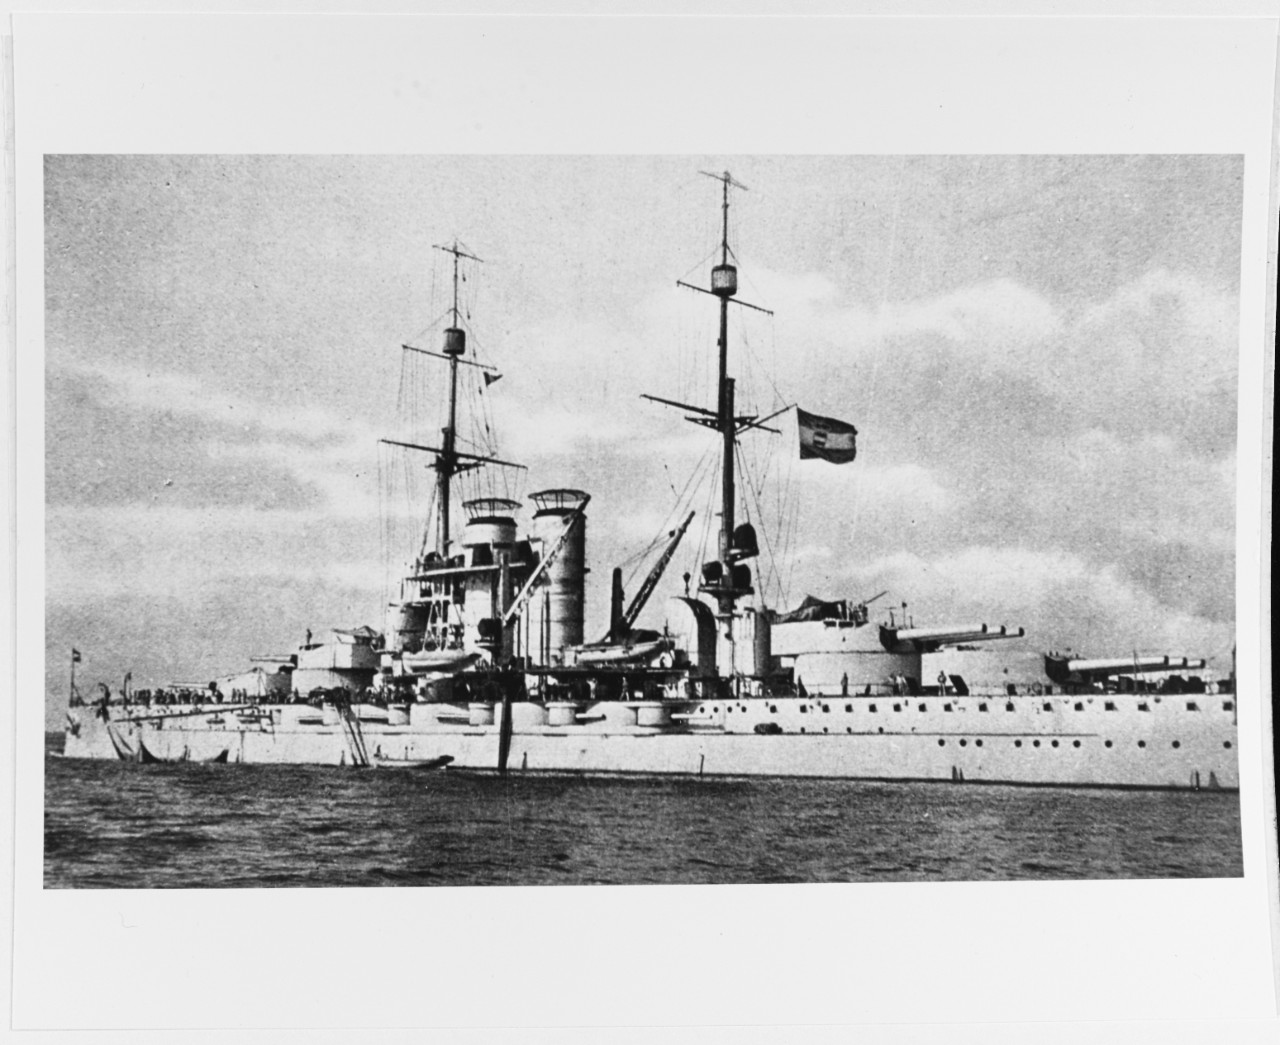 SZENT ISTVAN Austrian Battleship, 1914-18